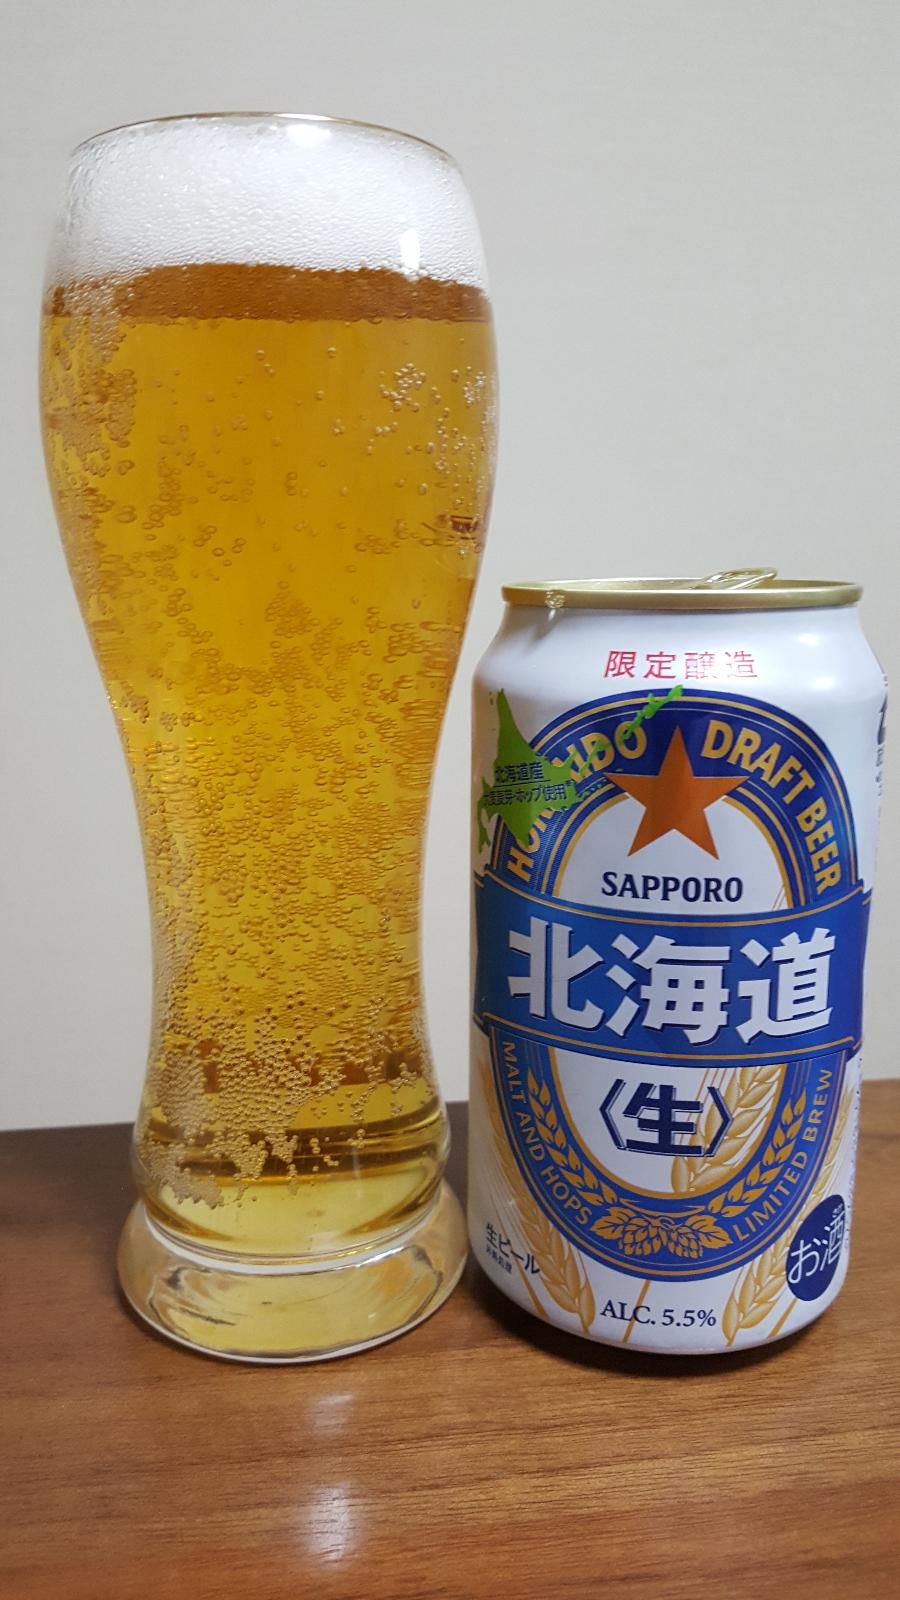 Hokkaido Draft Beer